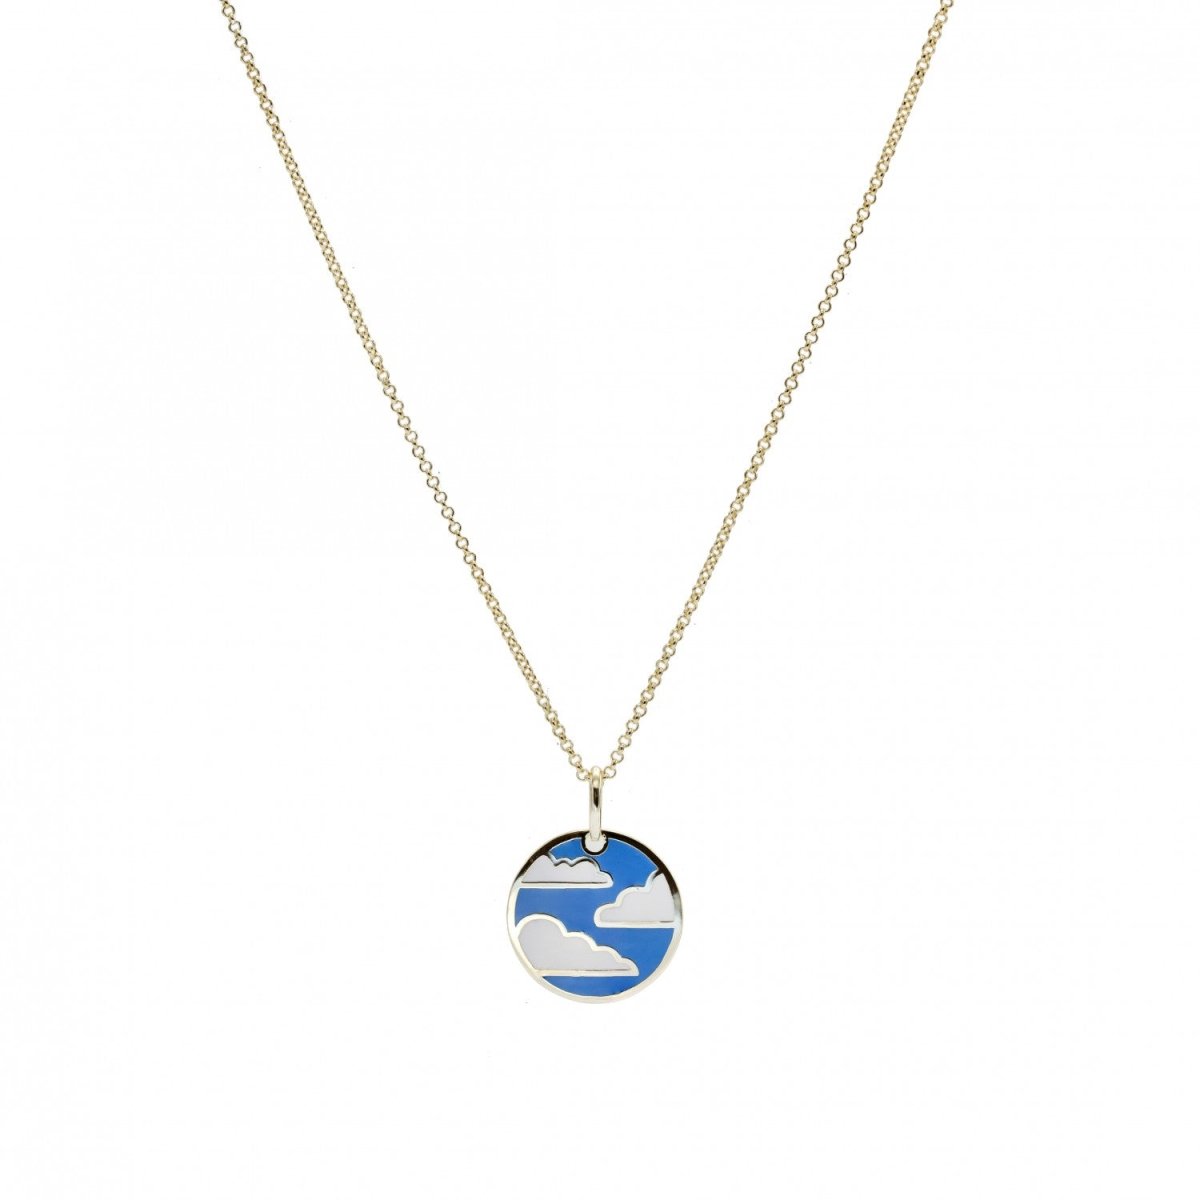 Collar · Collar medalla de plata de motivo nubes de esmalte en tono azul eléctrico